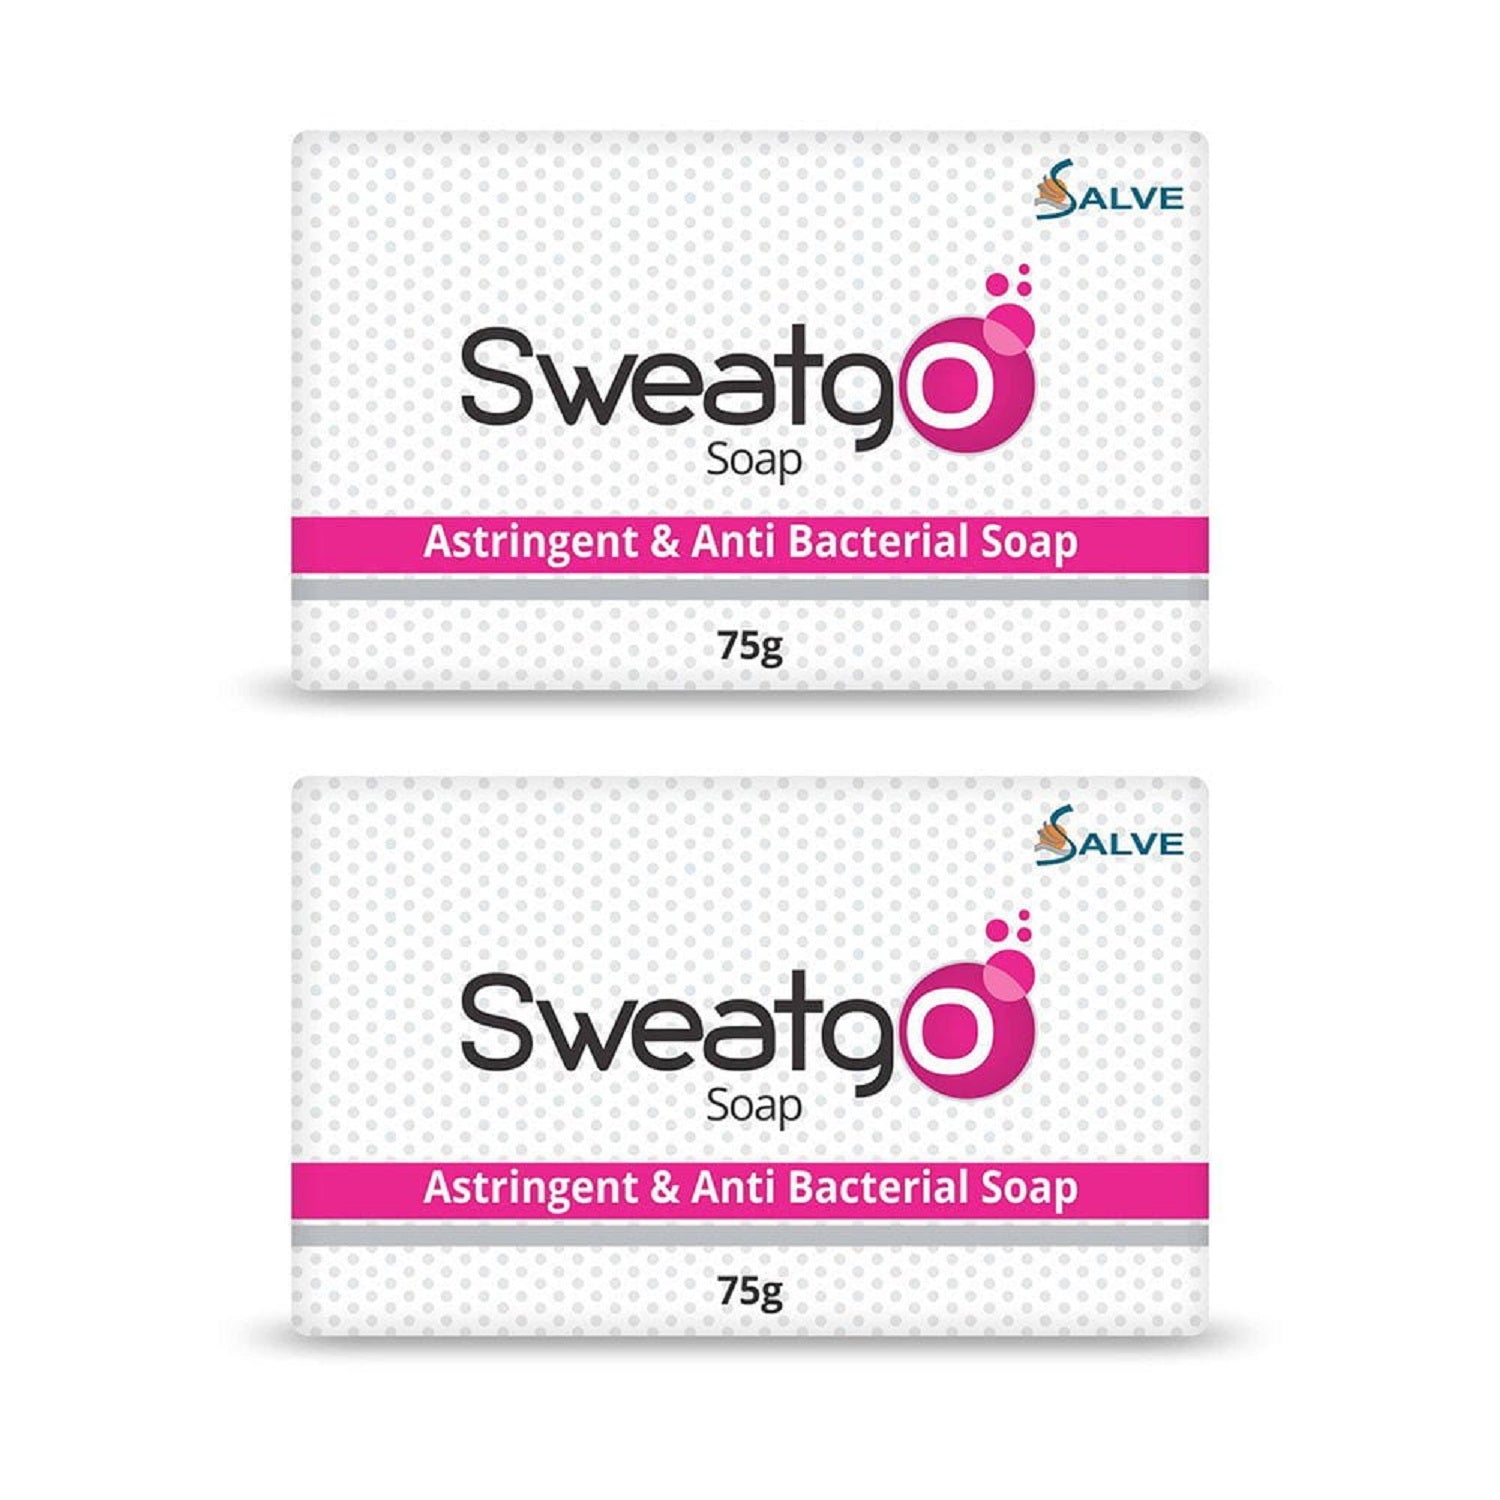 Shoprythm Sweatgo Pack of 2 Copy of Salve Sweatgo Antibacterial Astringent, Antiperspirant Soap for Control of Hyperhidrosis & Excessive